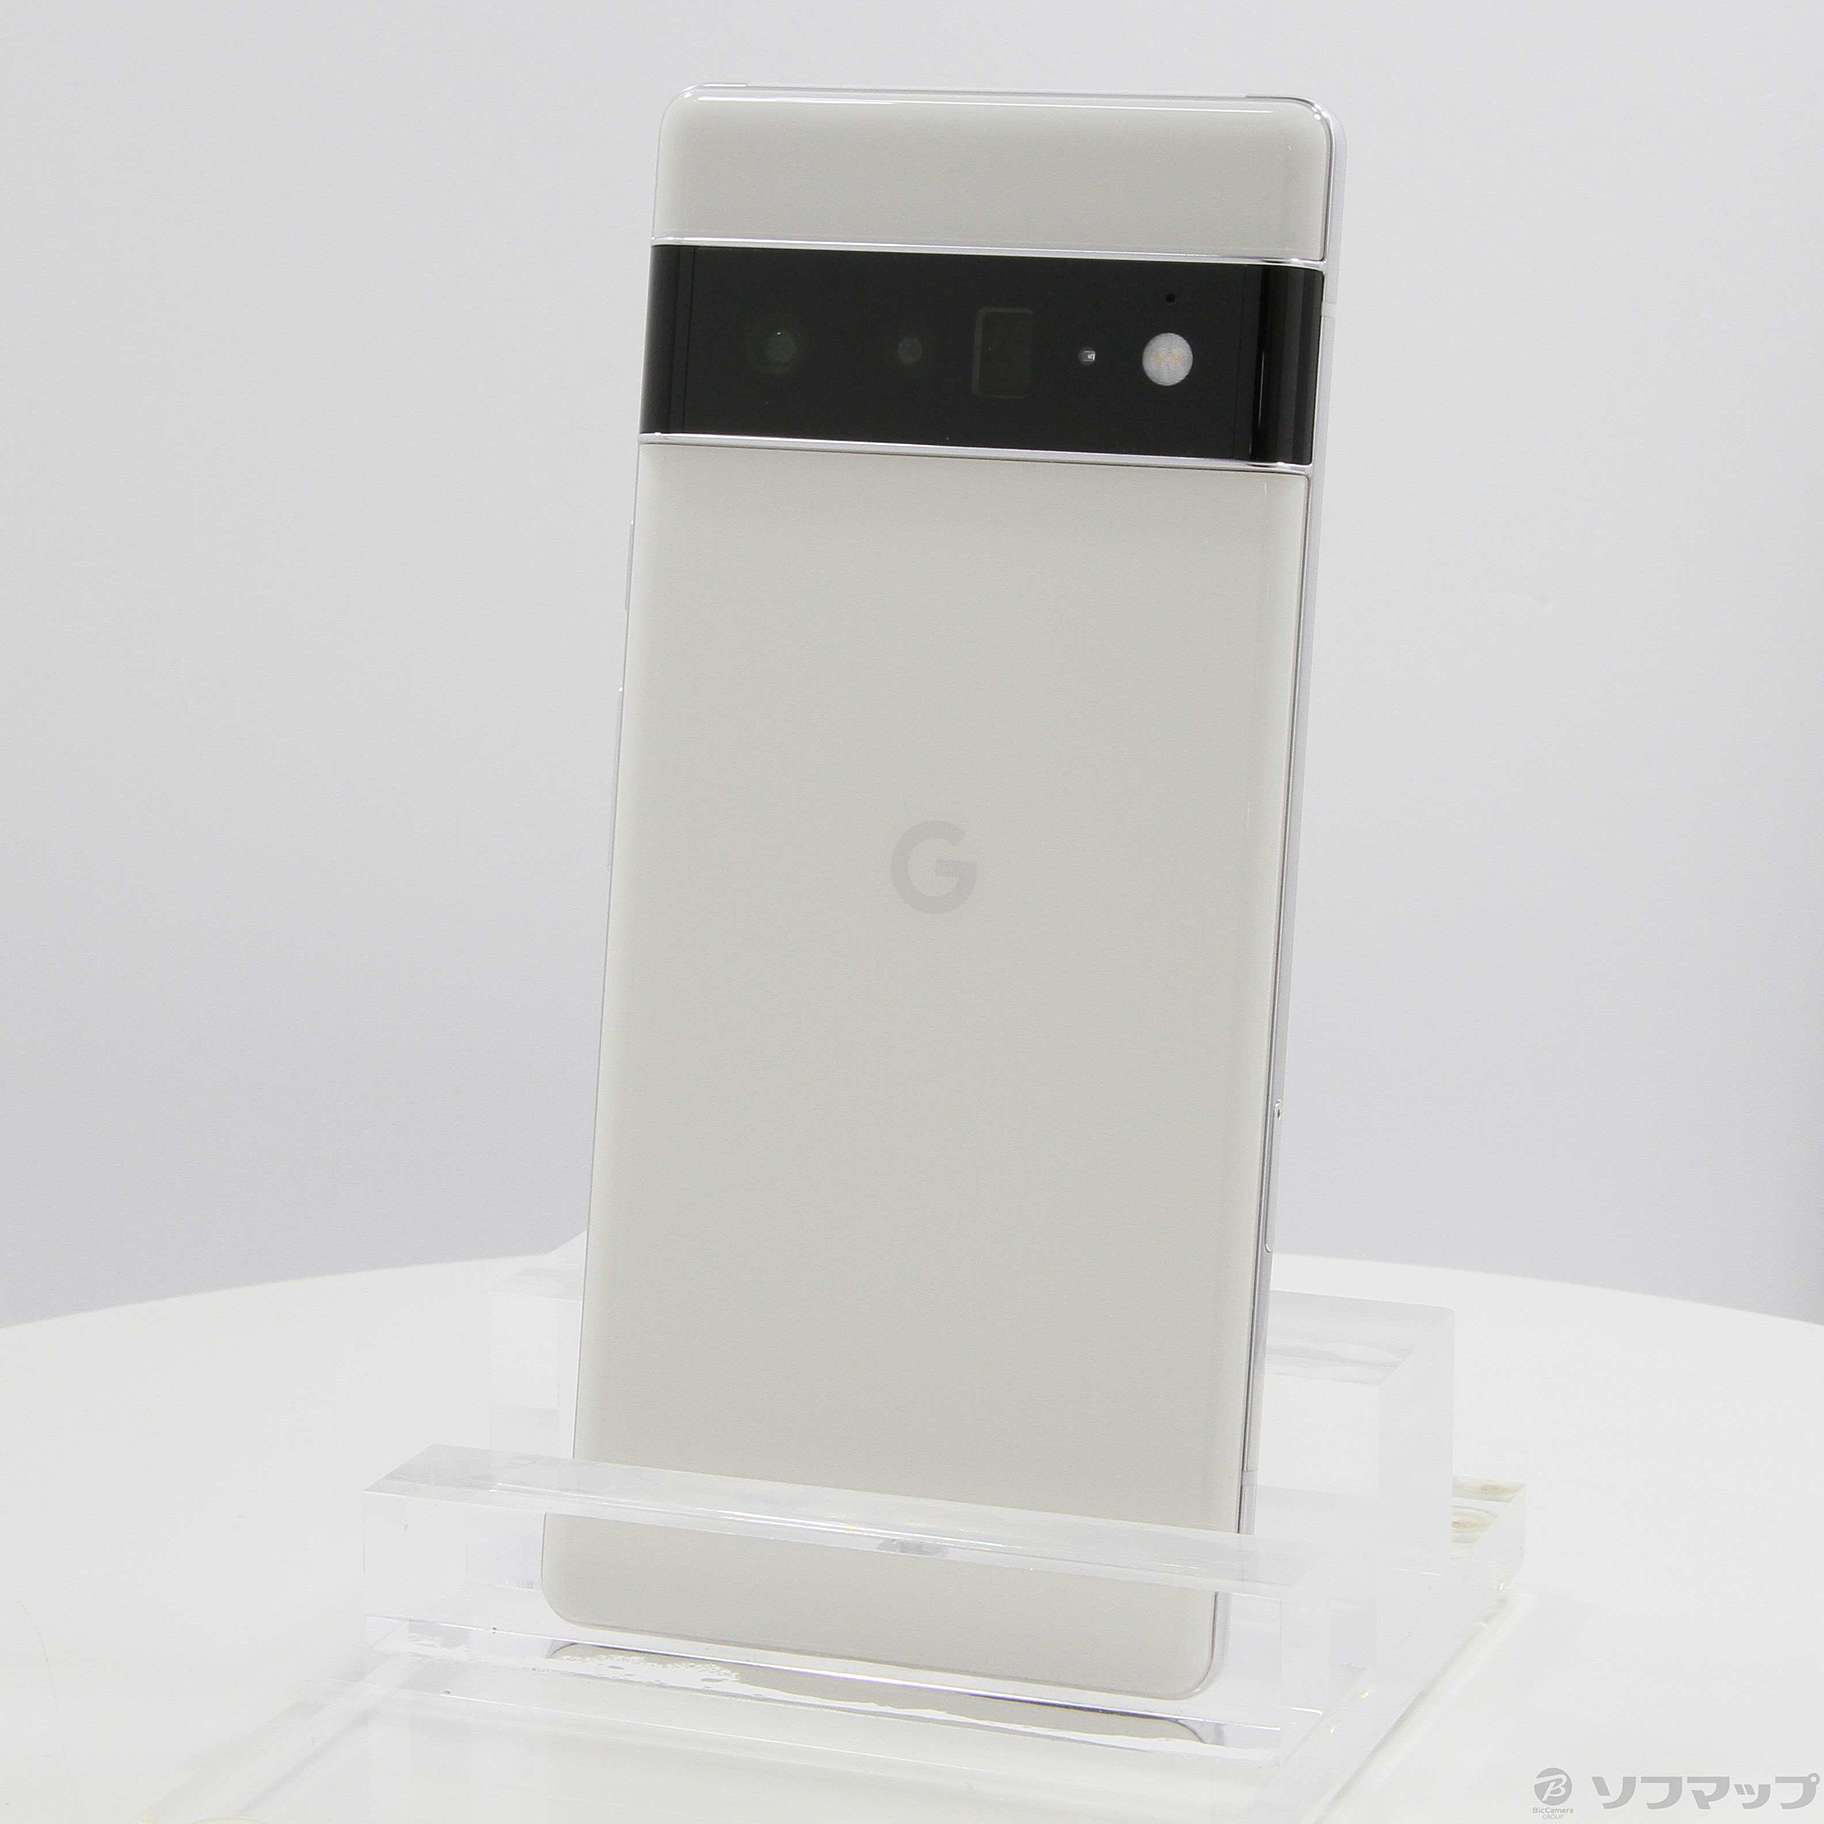 Google Pixel 6 Pro 128GB クラウディホワイト GF5KQ SIMフリー